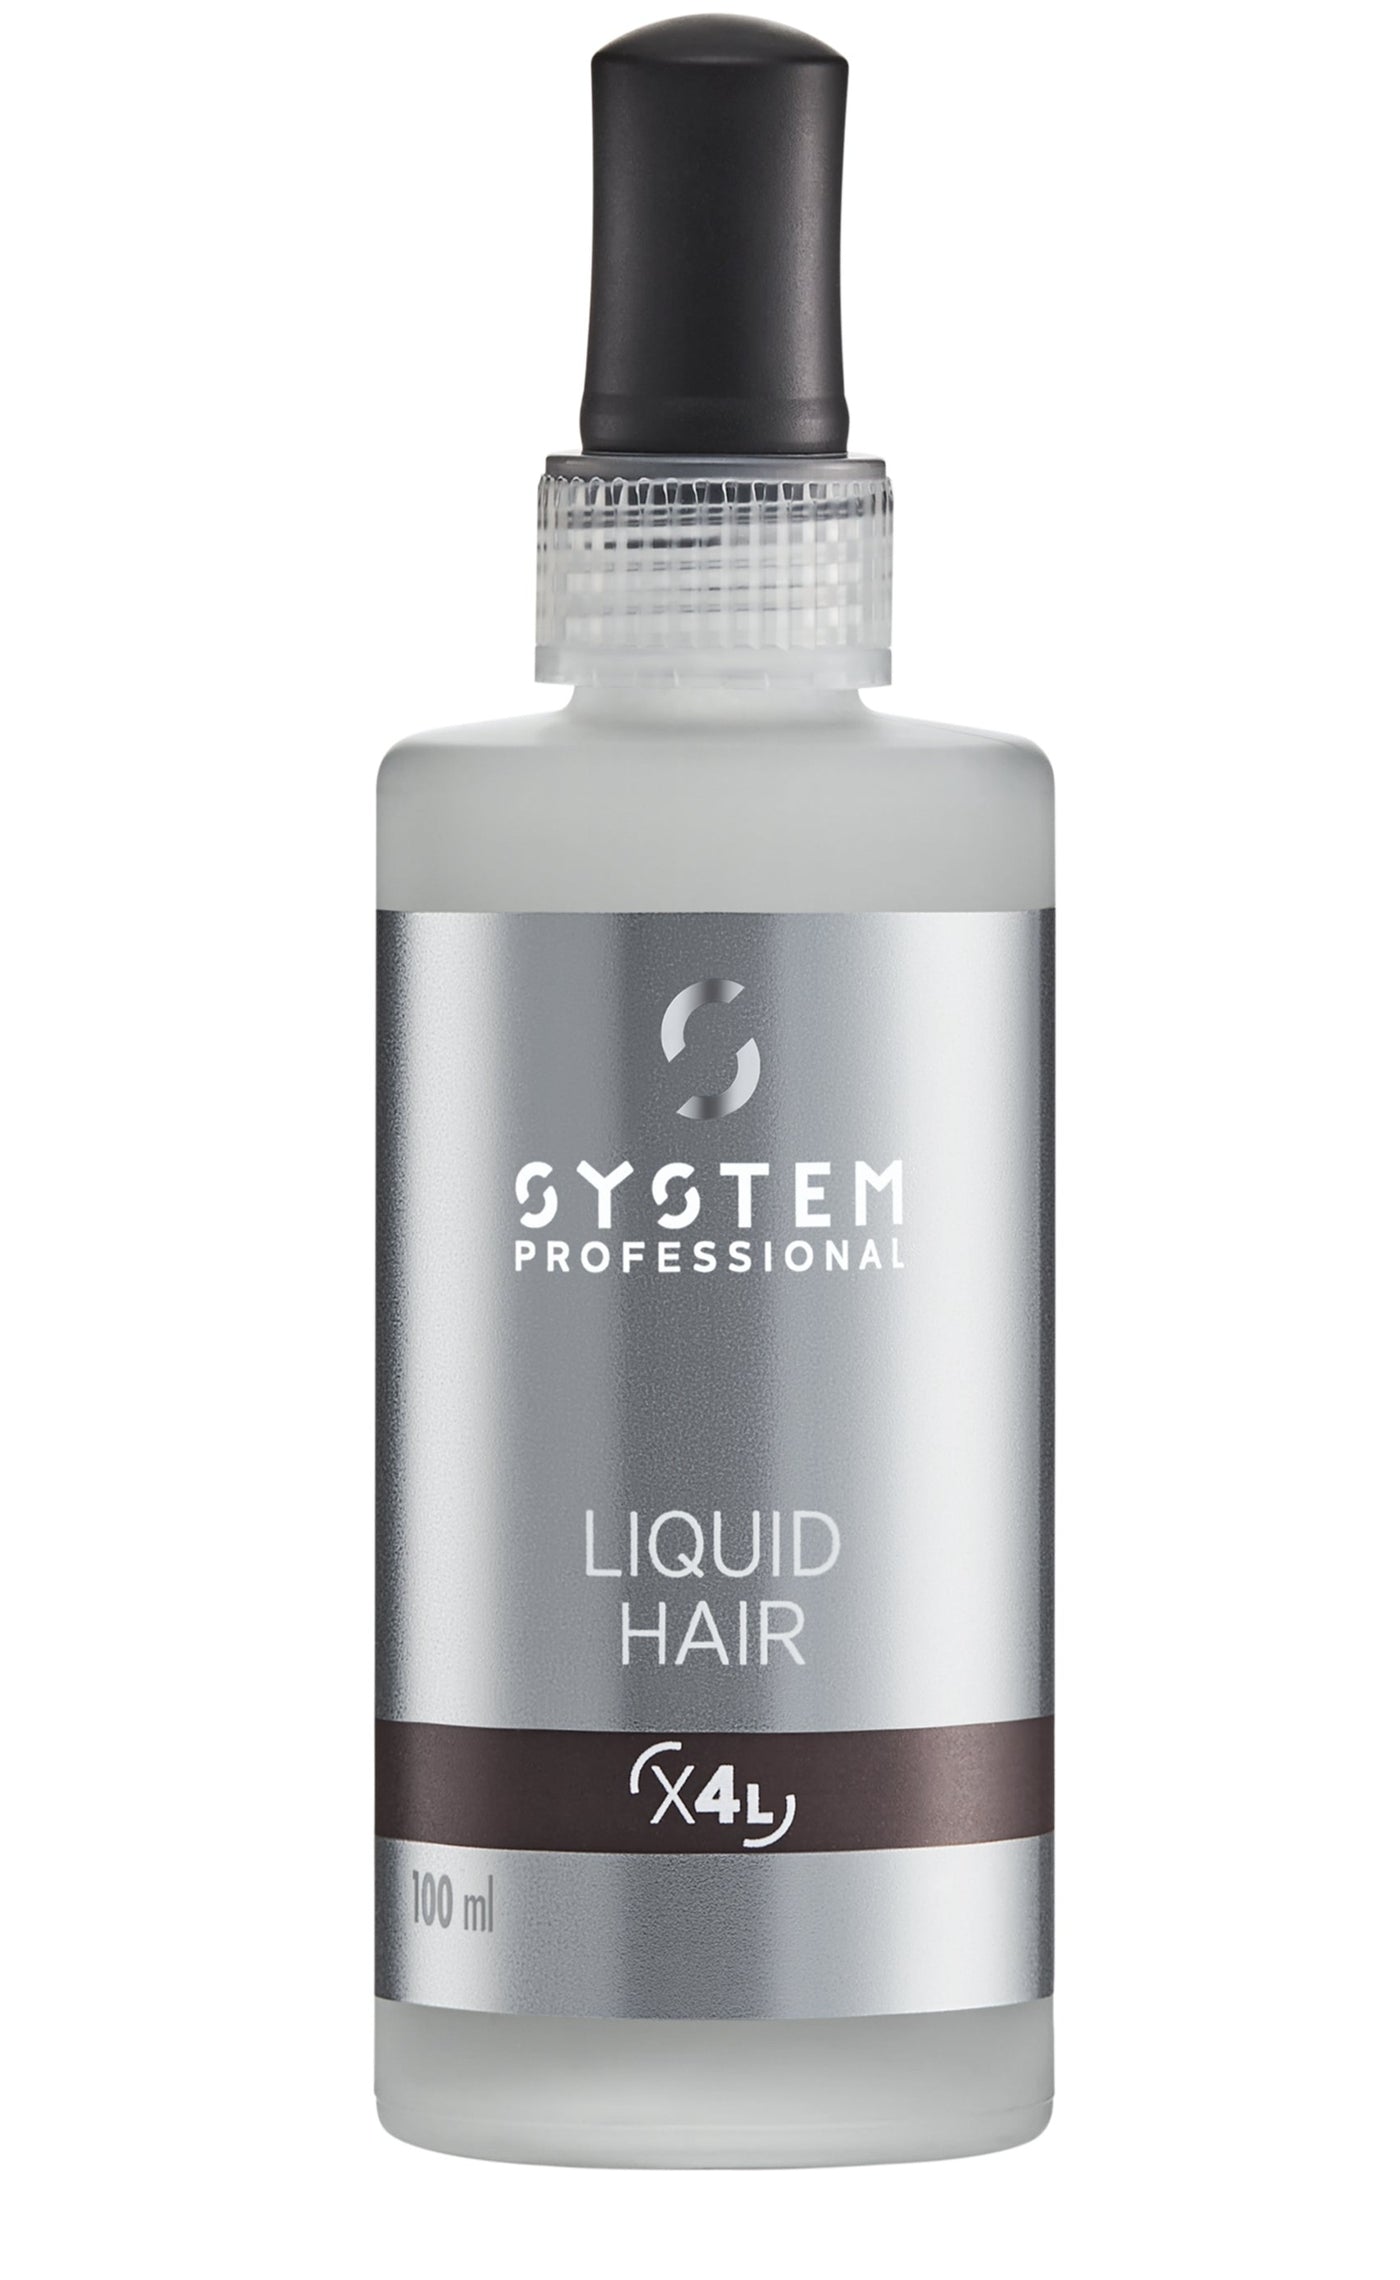 System Professional Liquid Hair 100mL - Salon Warehouse